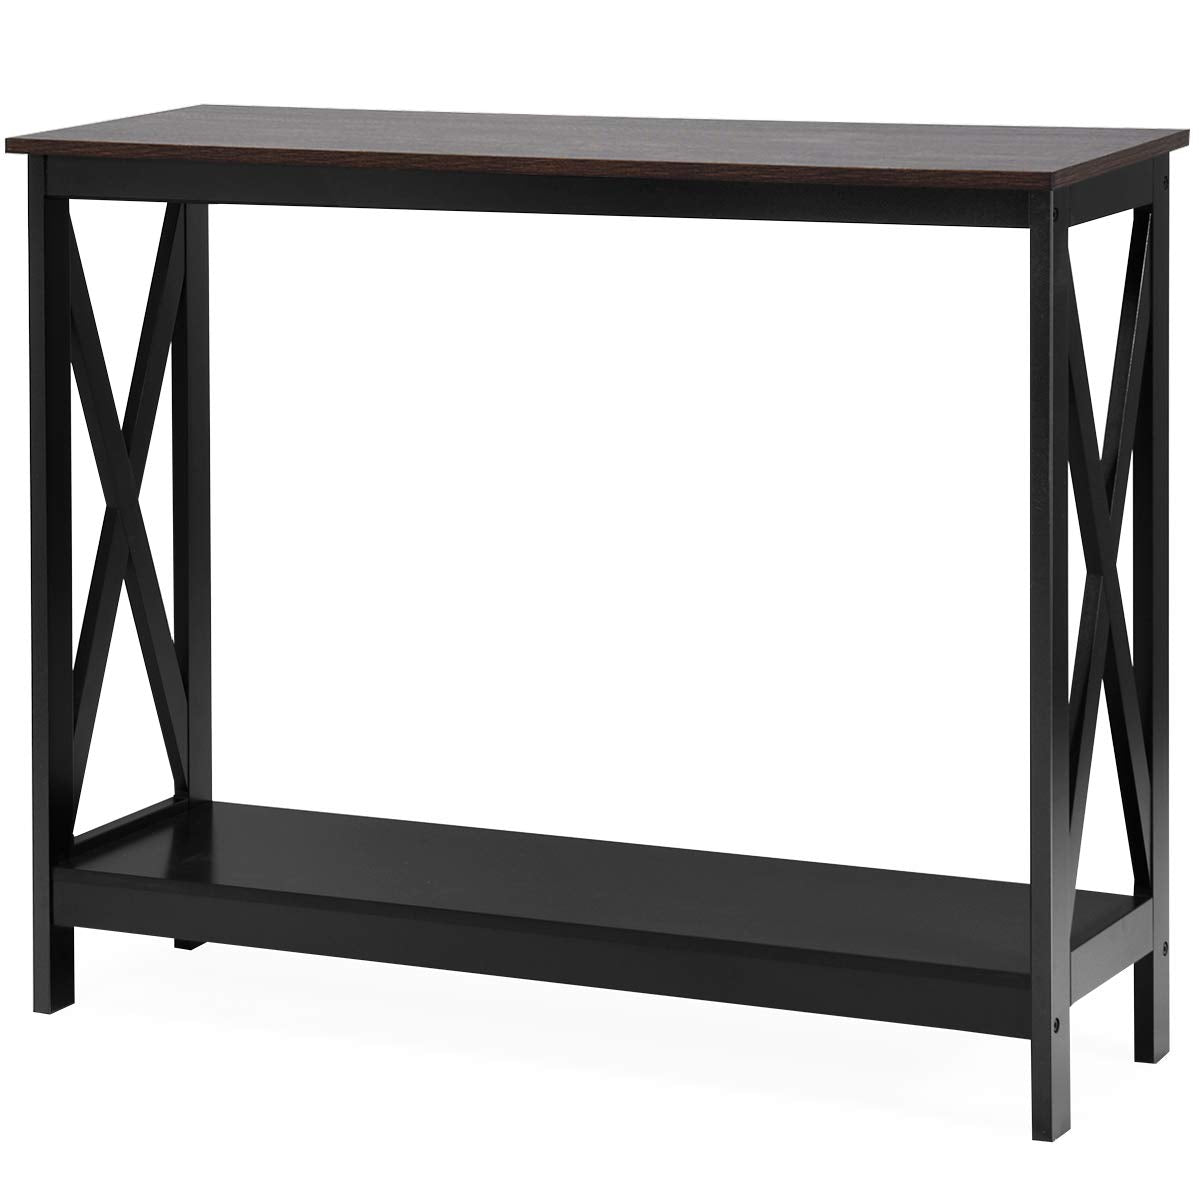 Giantex Console Table 2-Tier with Storage Shelf,X-Design Bookshelf